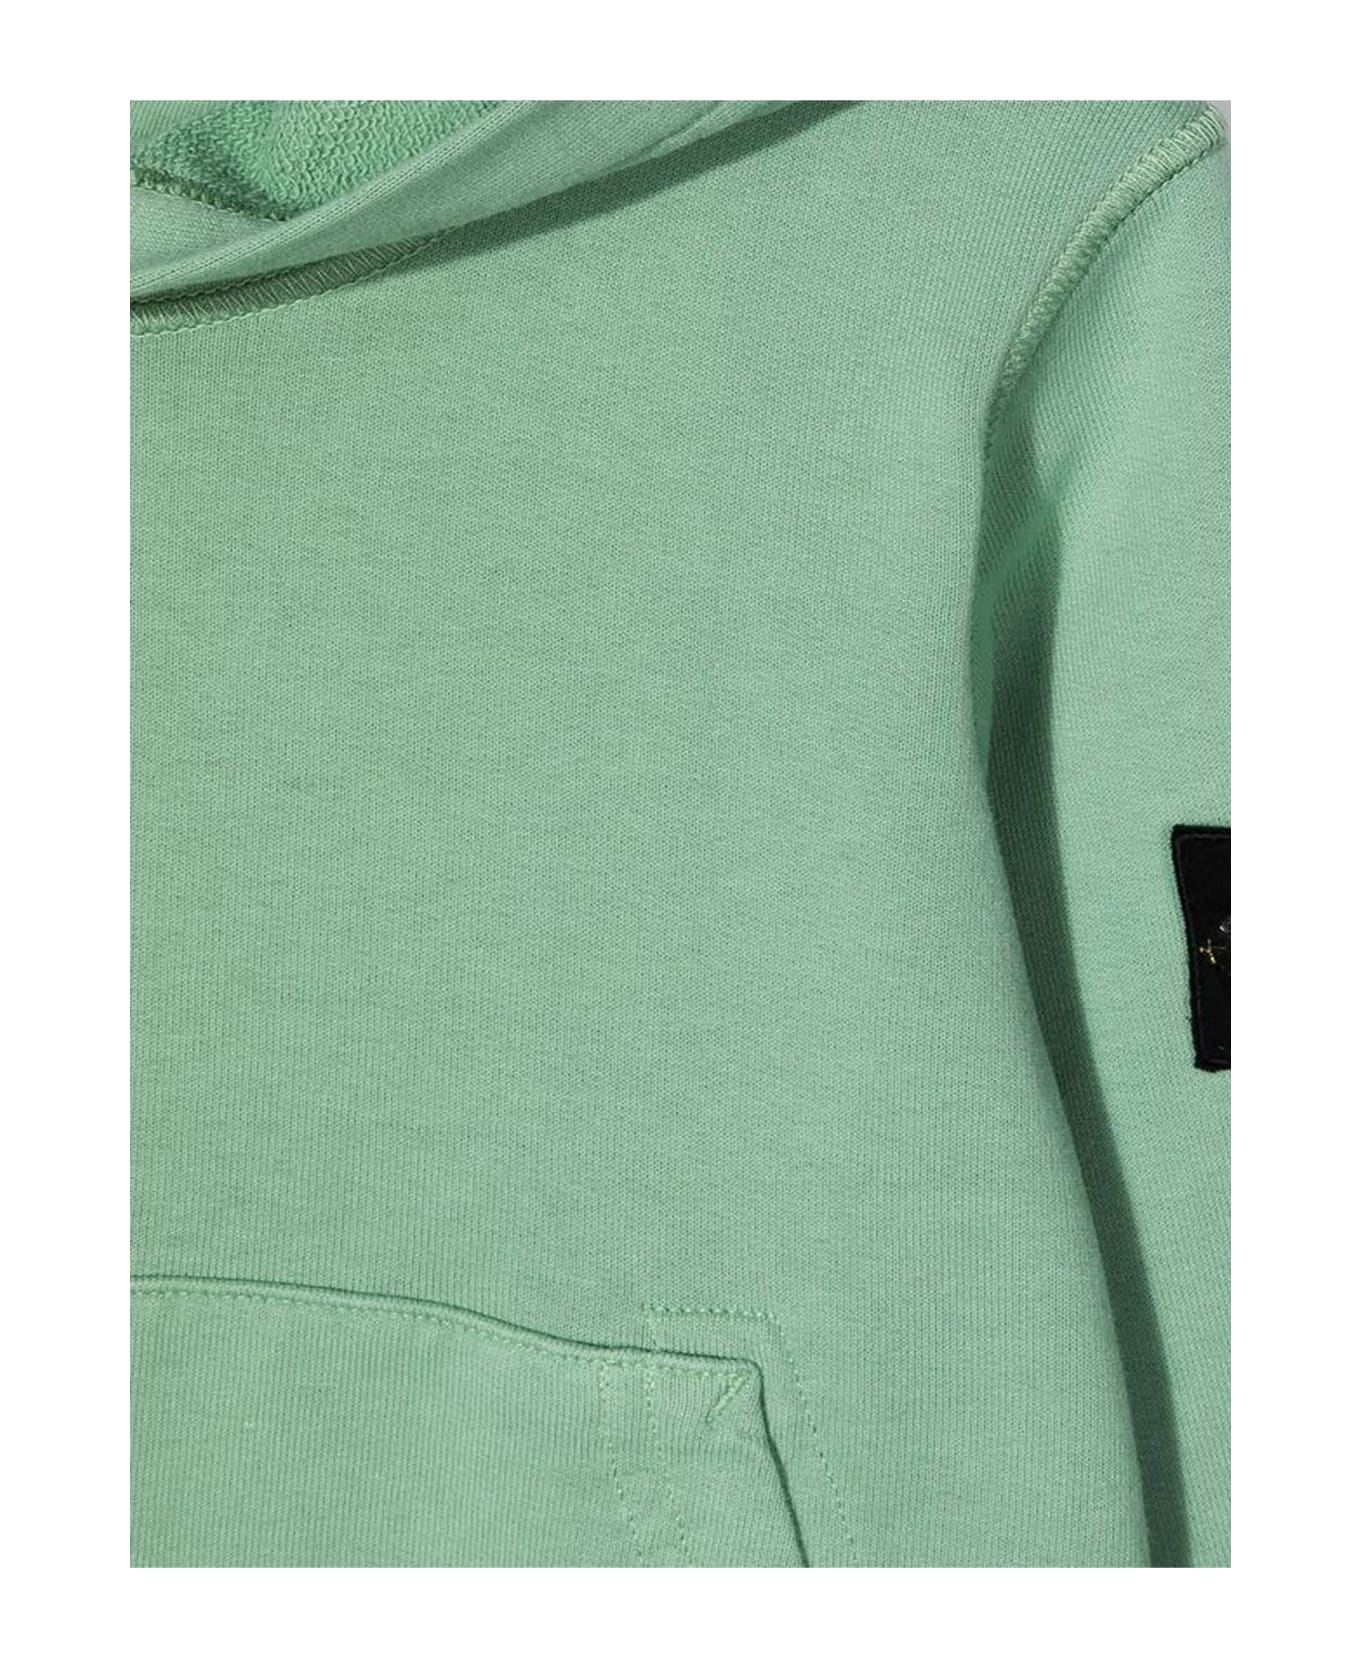 Stone Island Green Cotton Sweatshirt - Verde